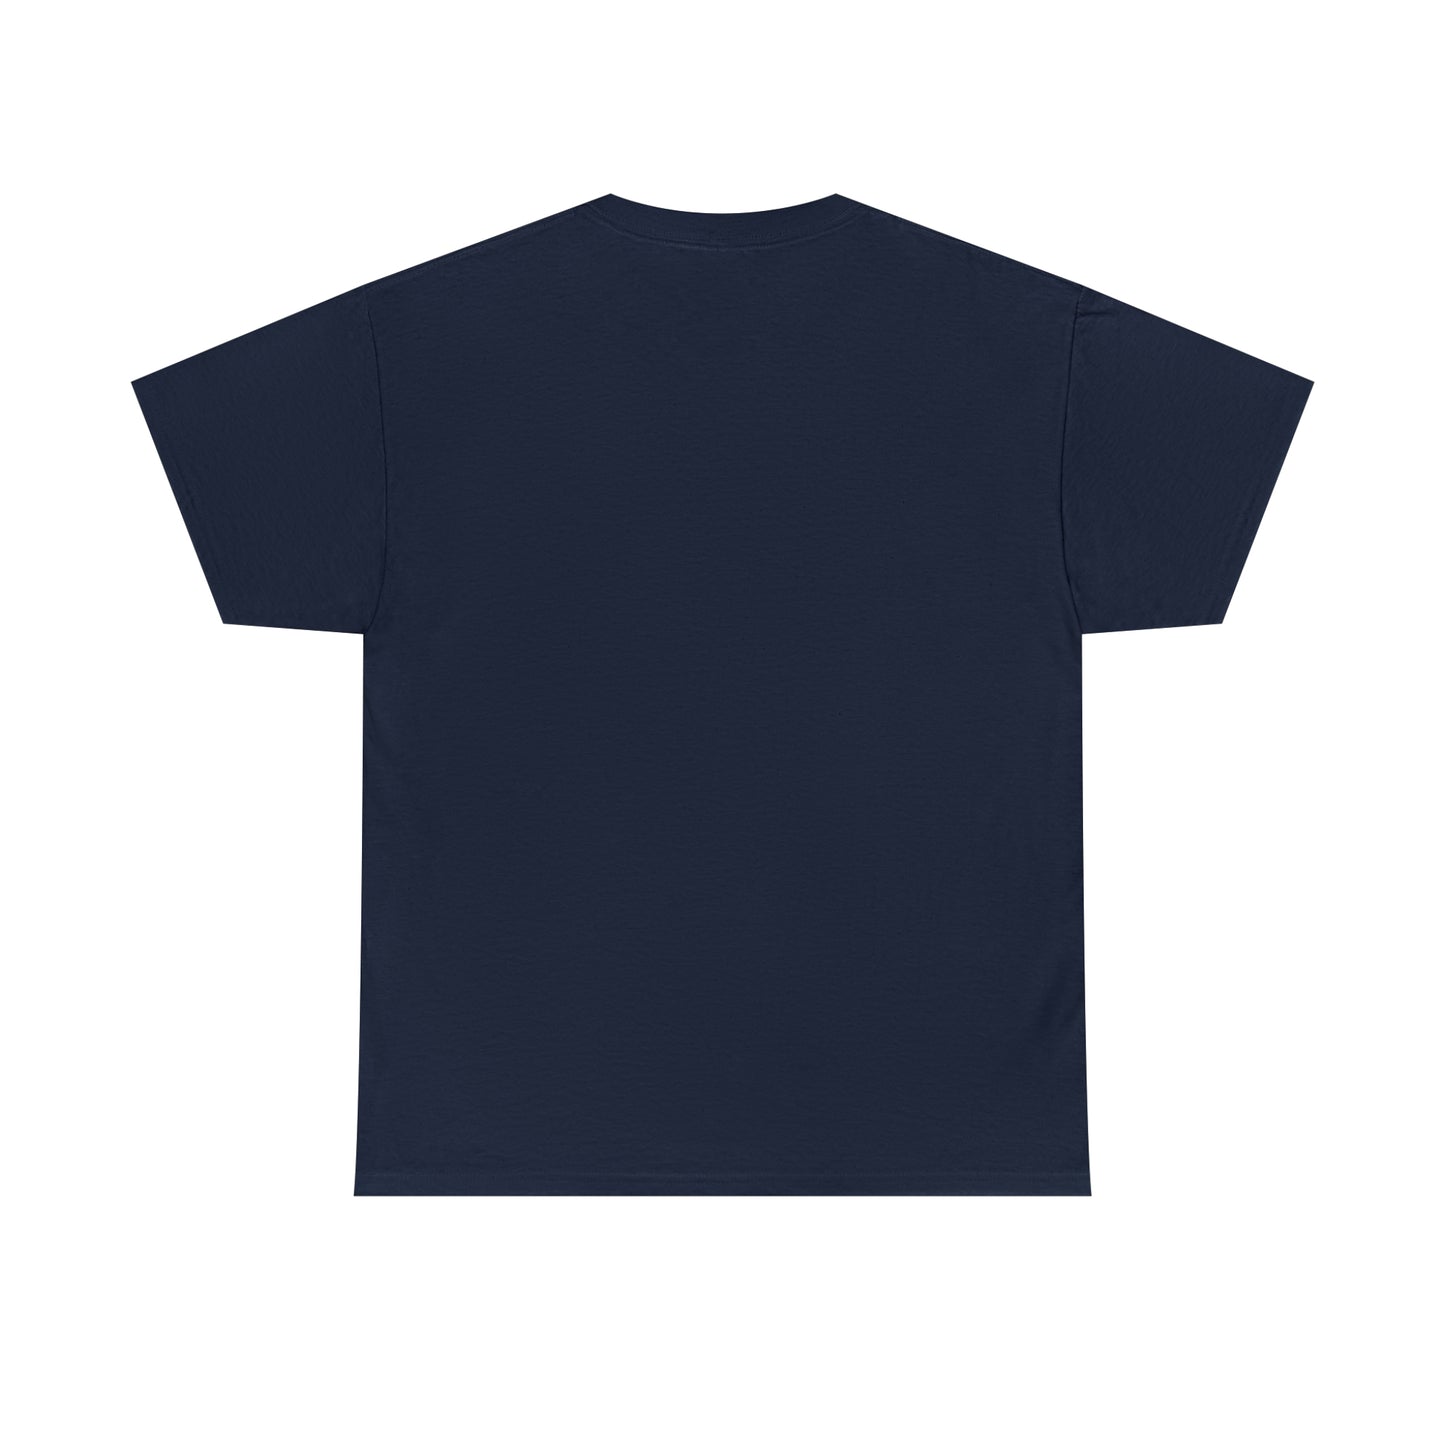 Nicaraguan Roots Design 1: Unisex T-Shirt